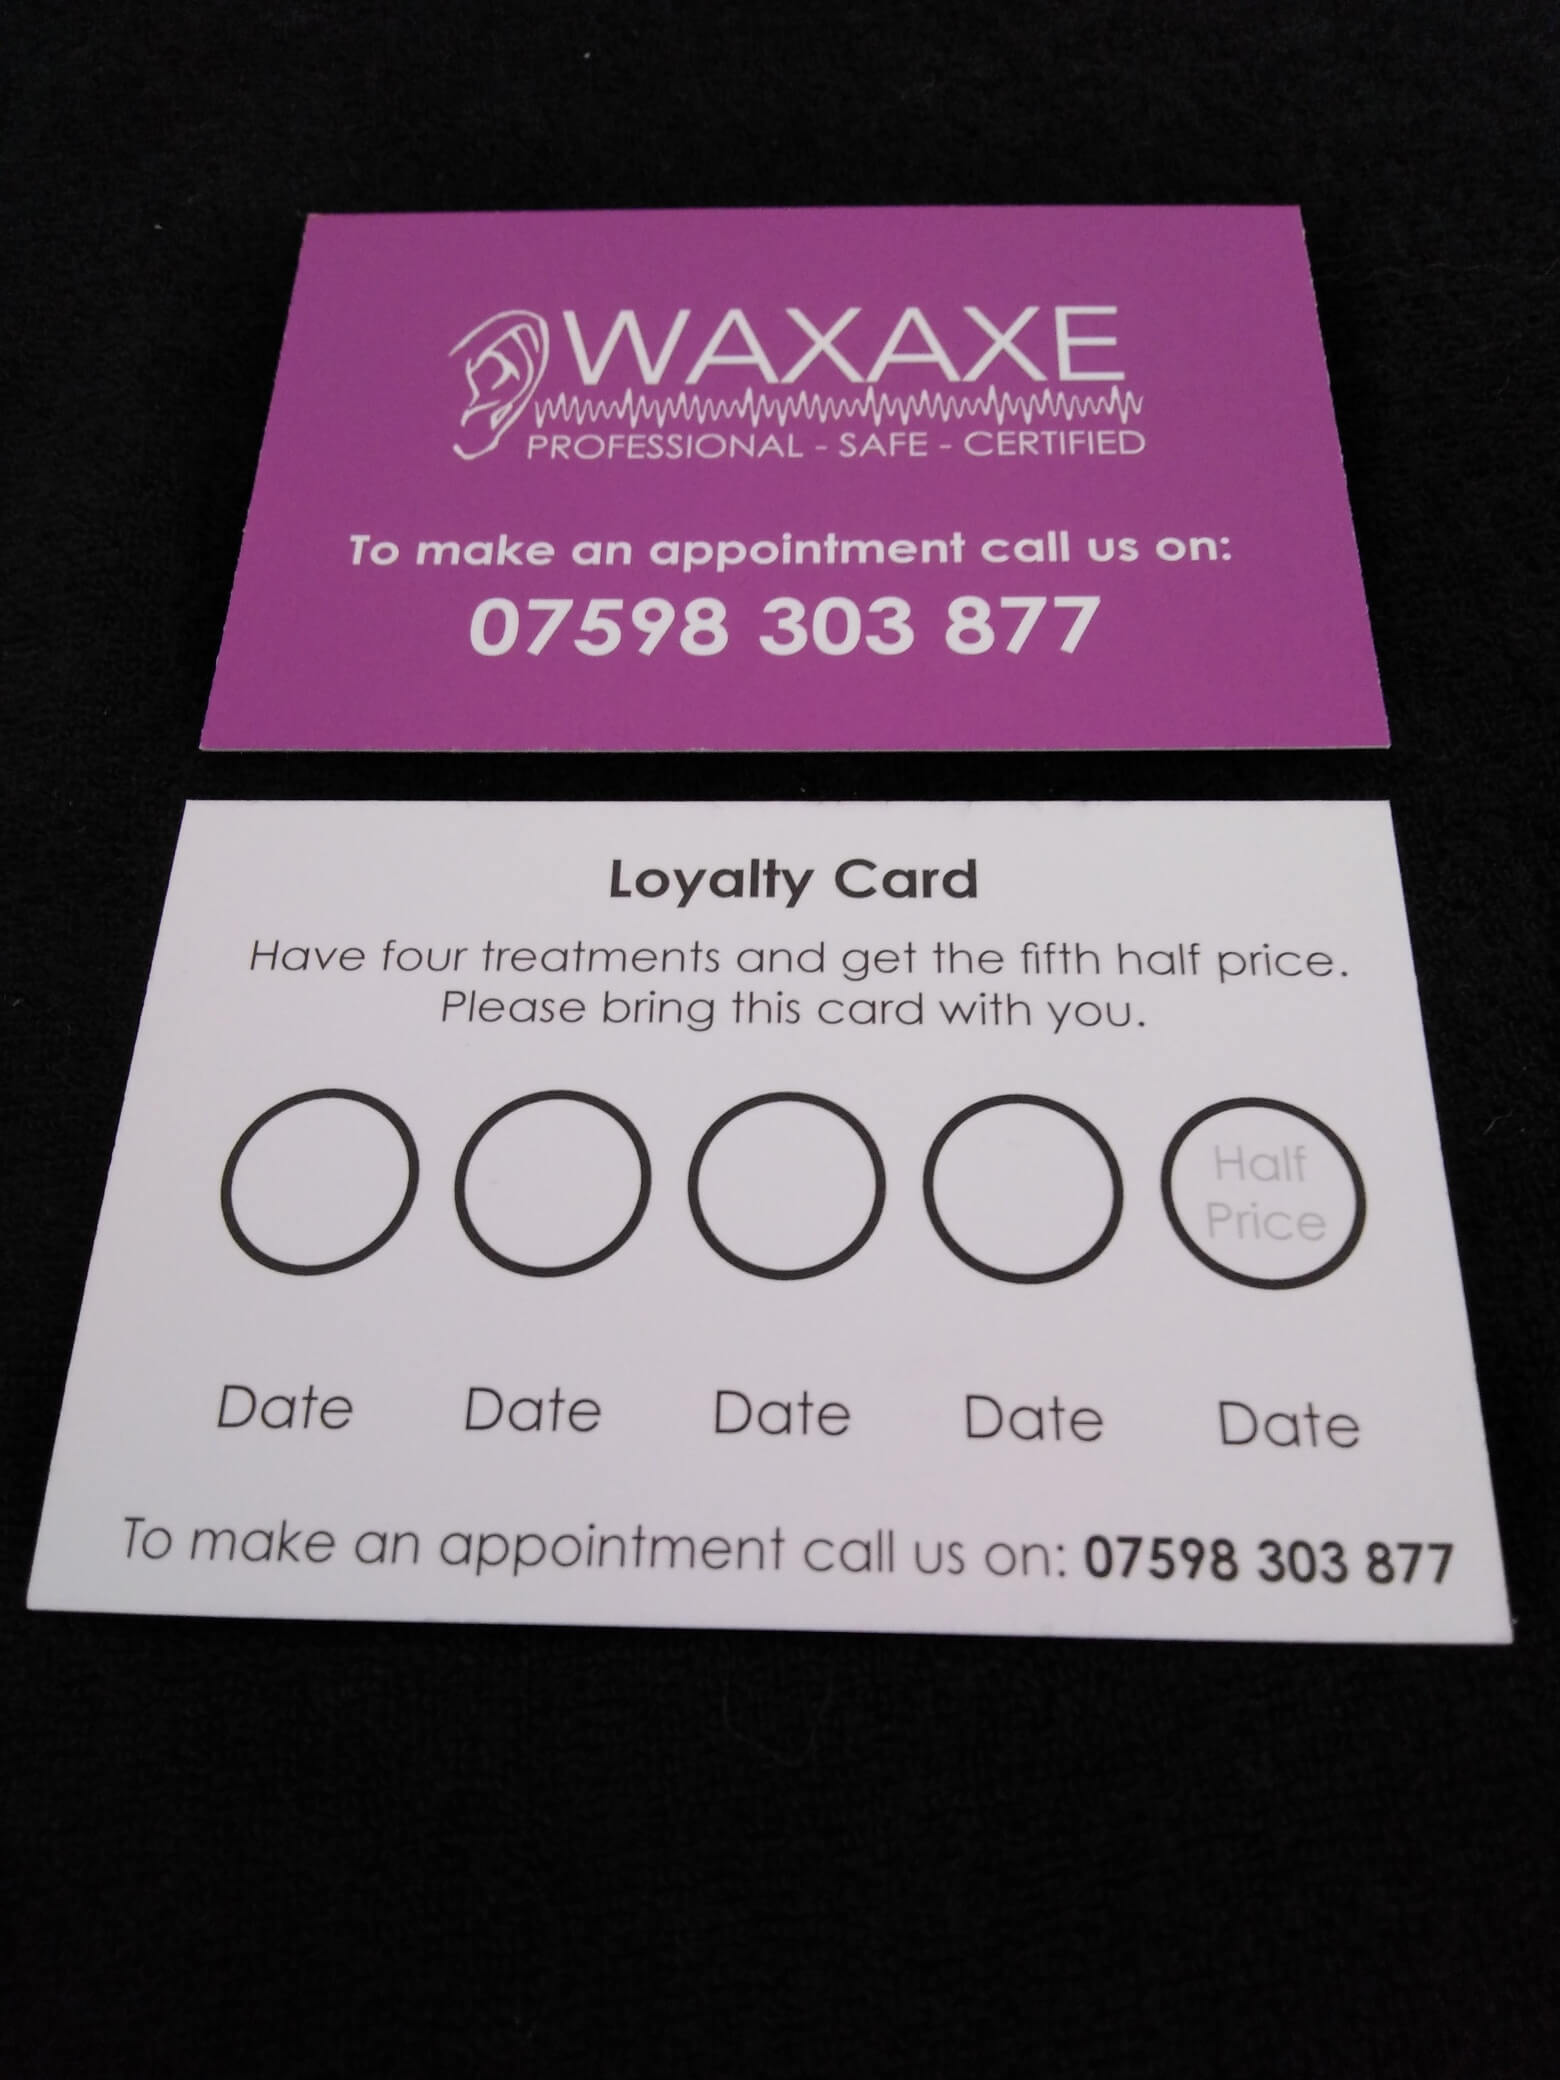 WaxAxe loyalty card